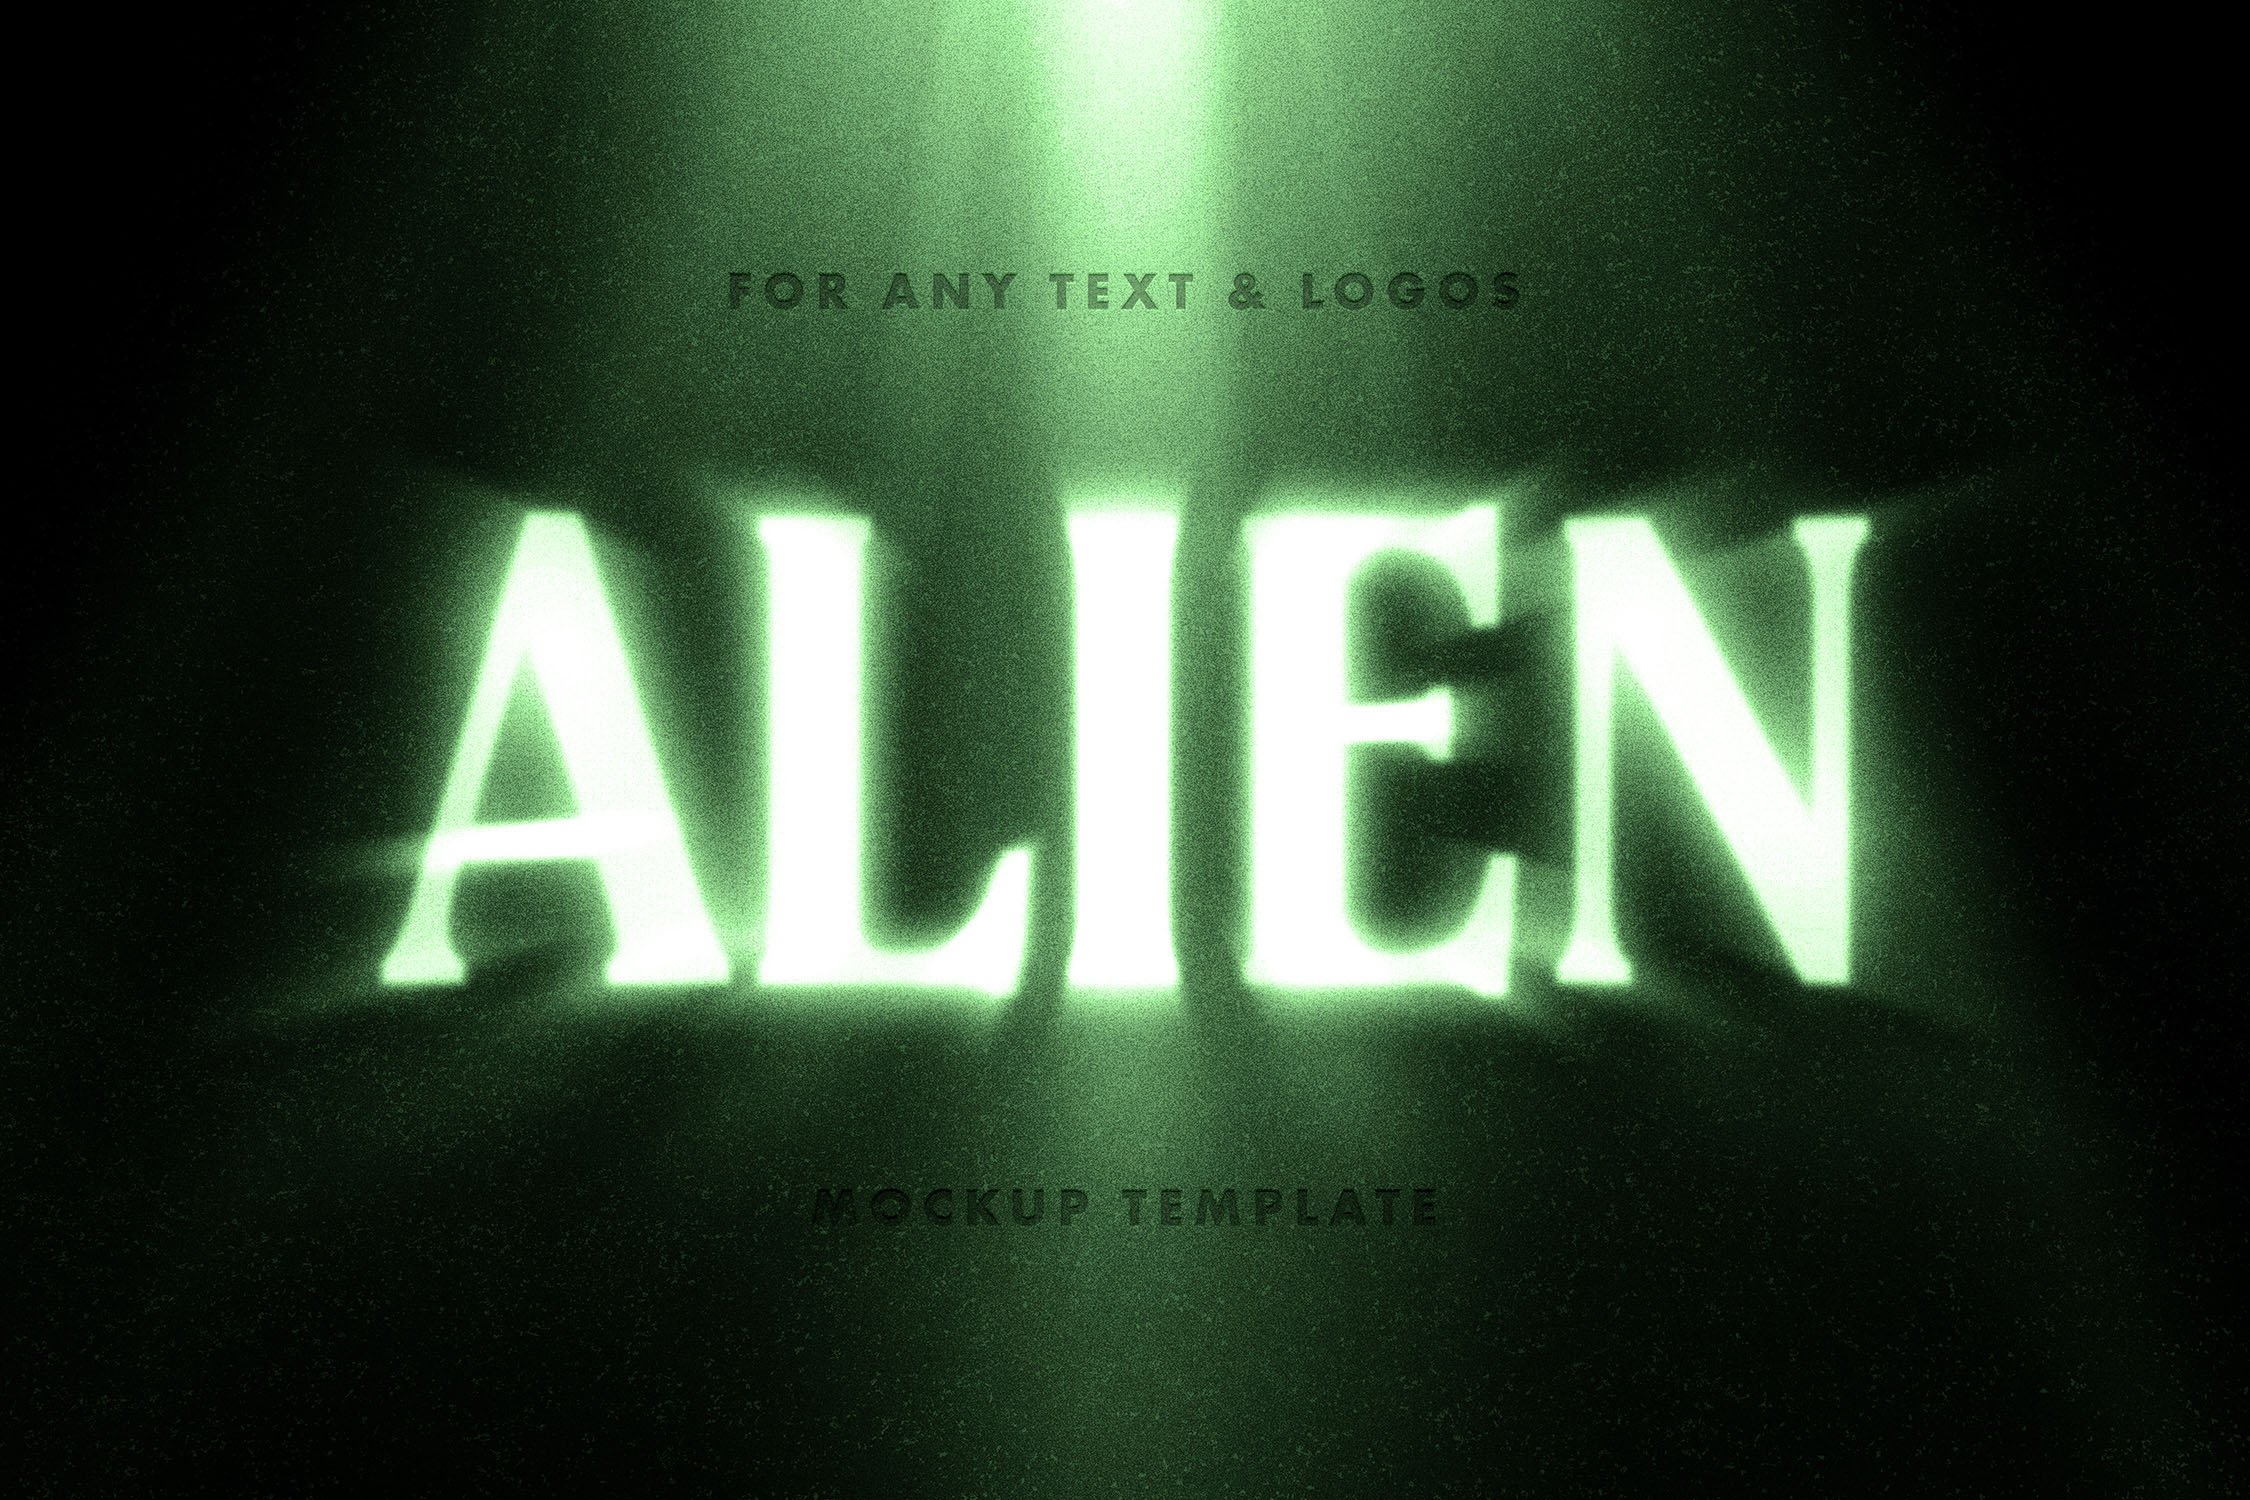 Alien Glow Text Effectcover image.